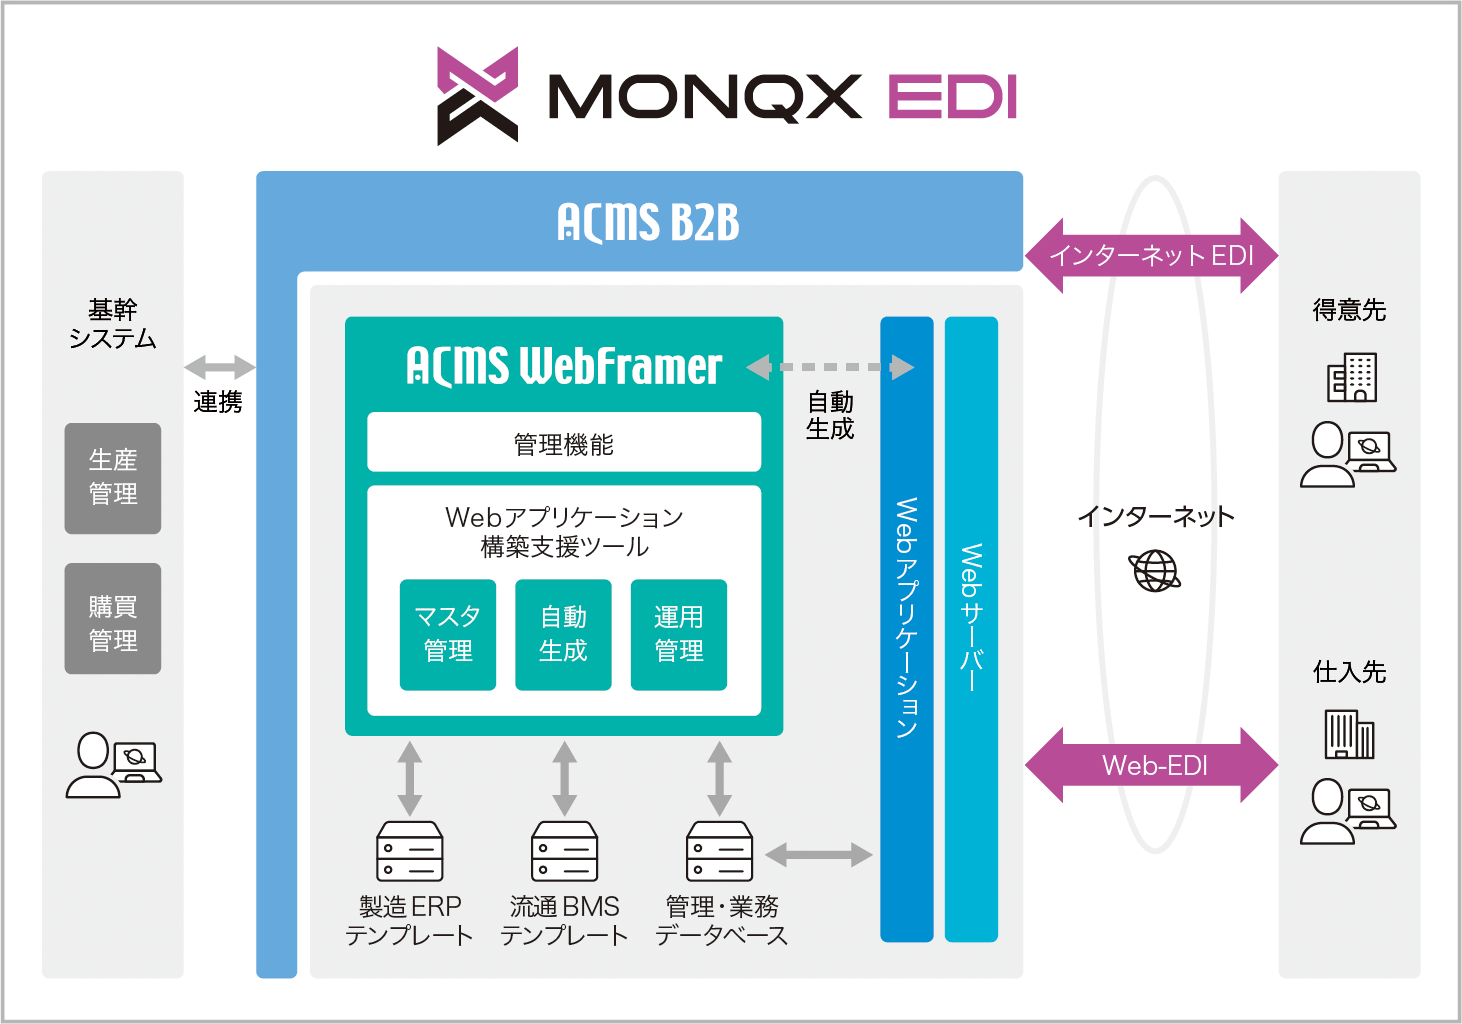 MONQX EDIシステム構成イメージ